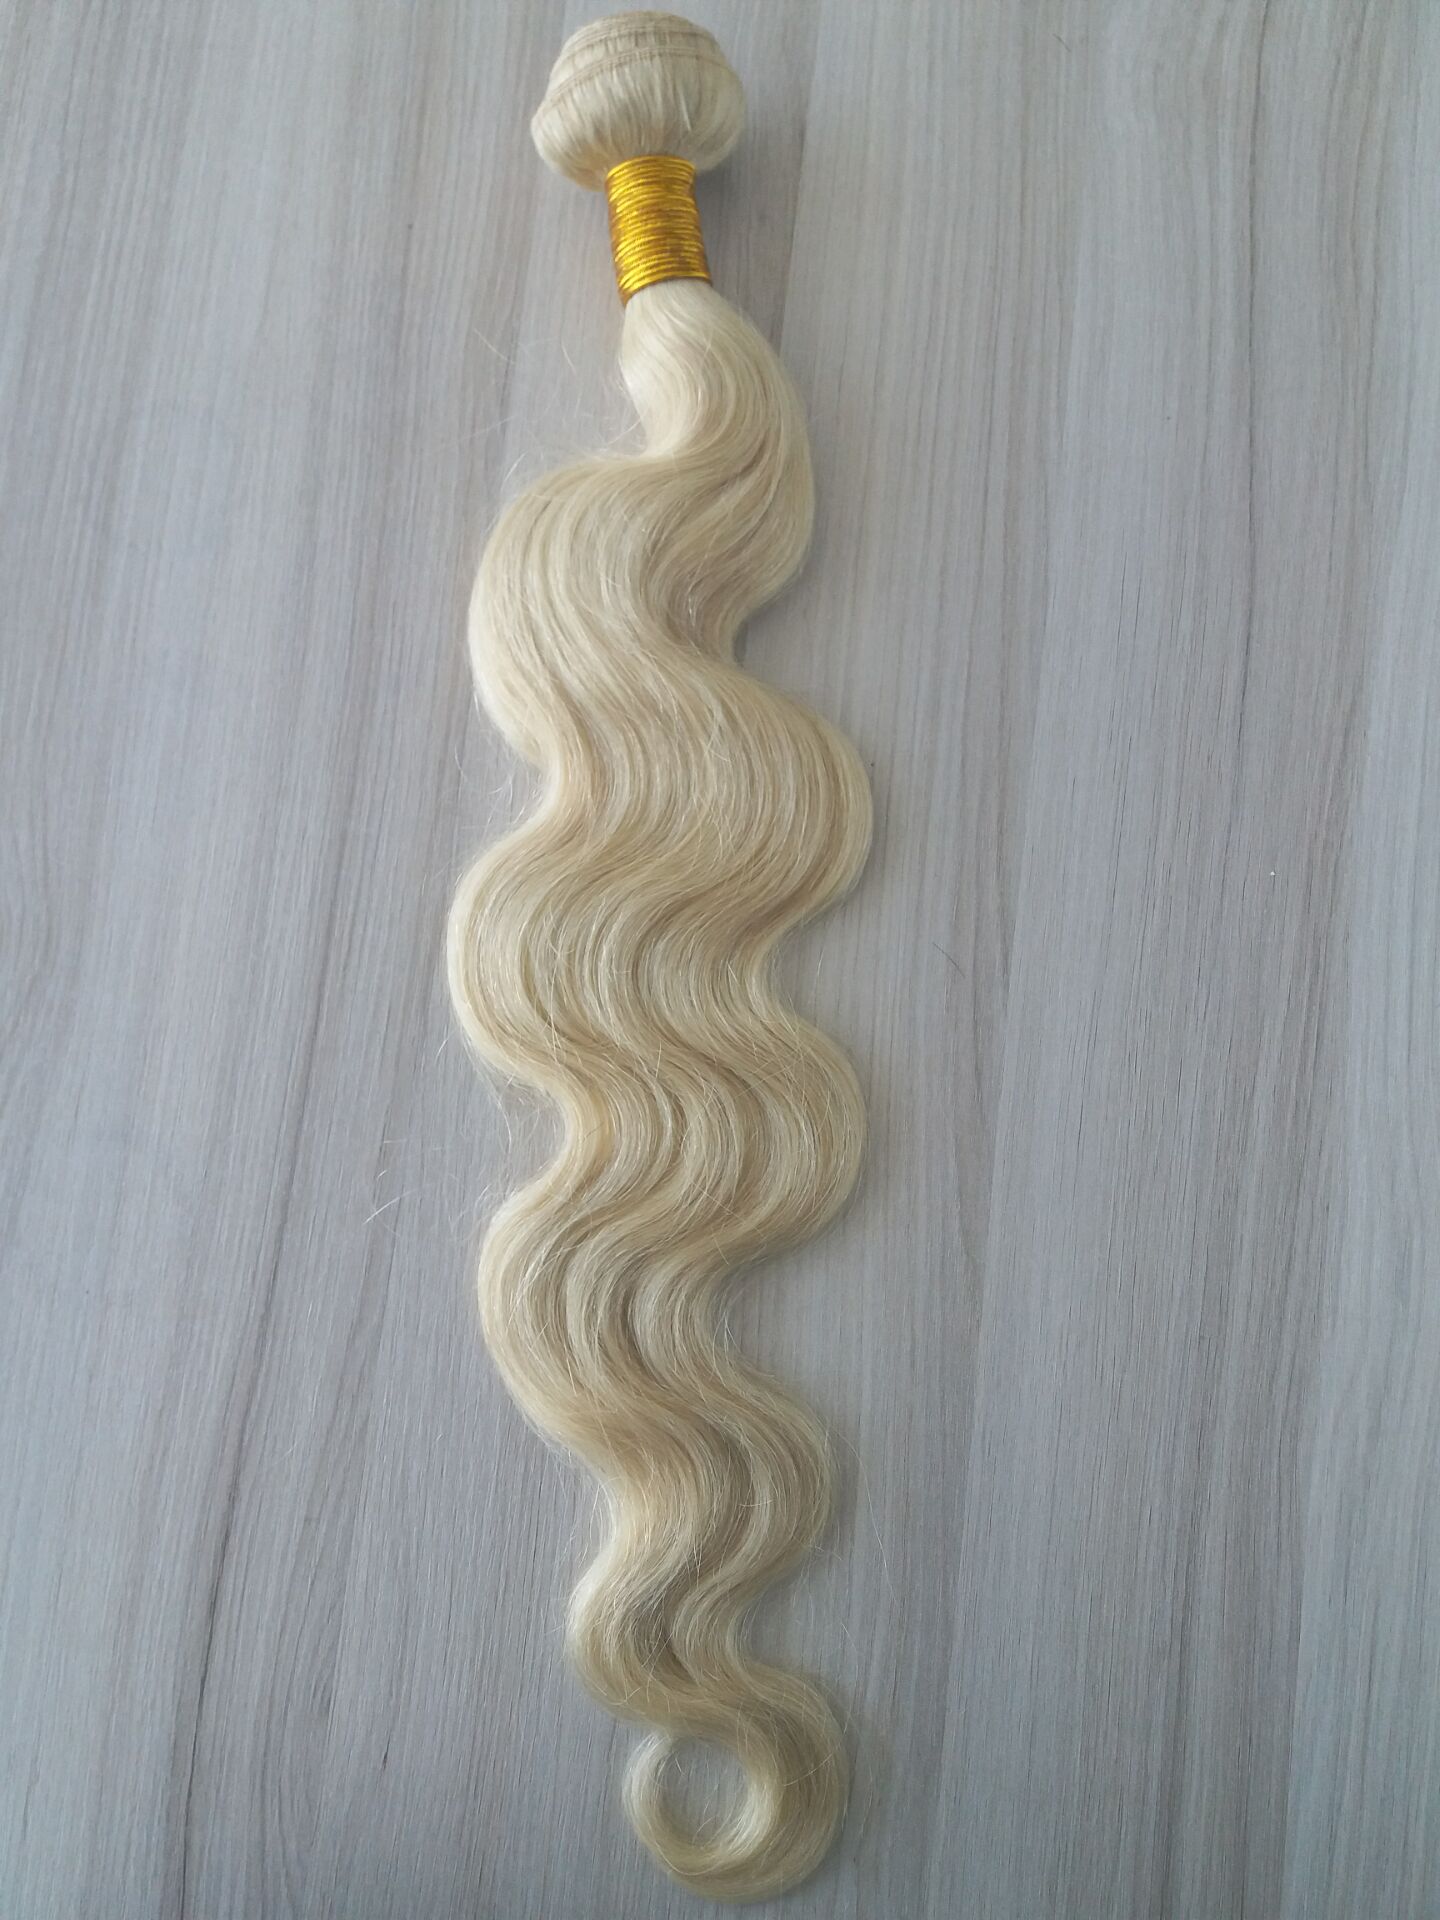 Raw  blonde 613 virgin remy hair colors extensions hair weaving YL191